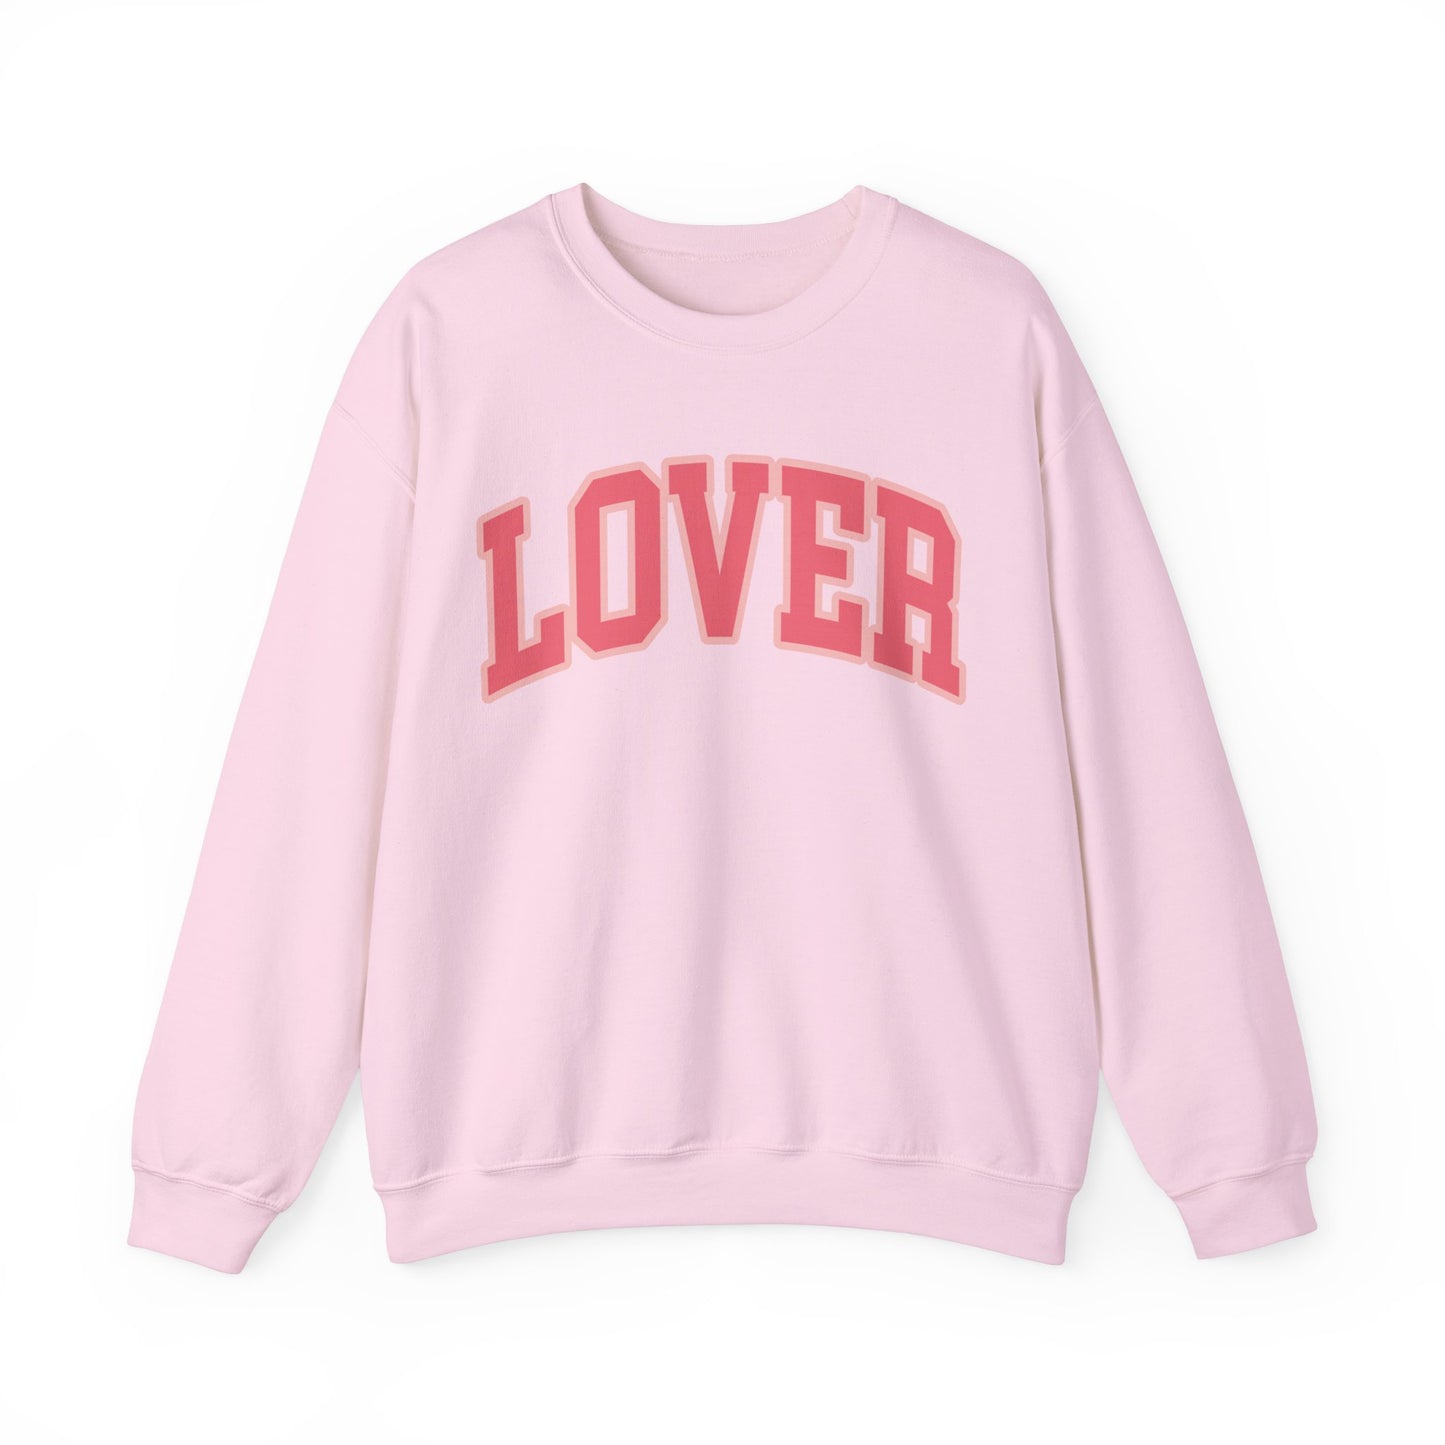 Lover Graphic Sweatshirt